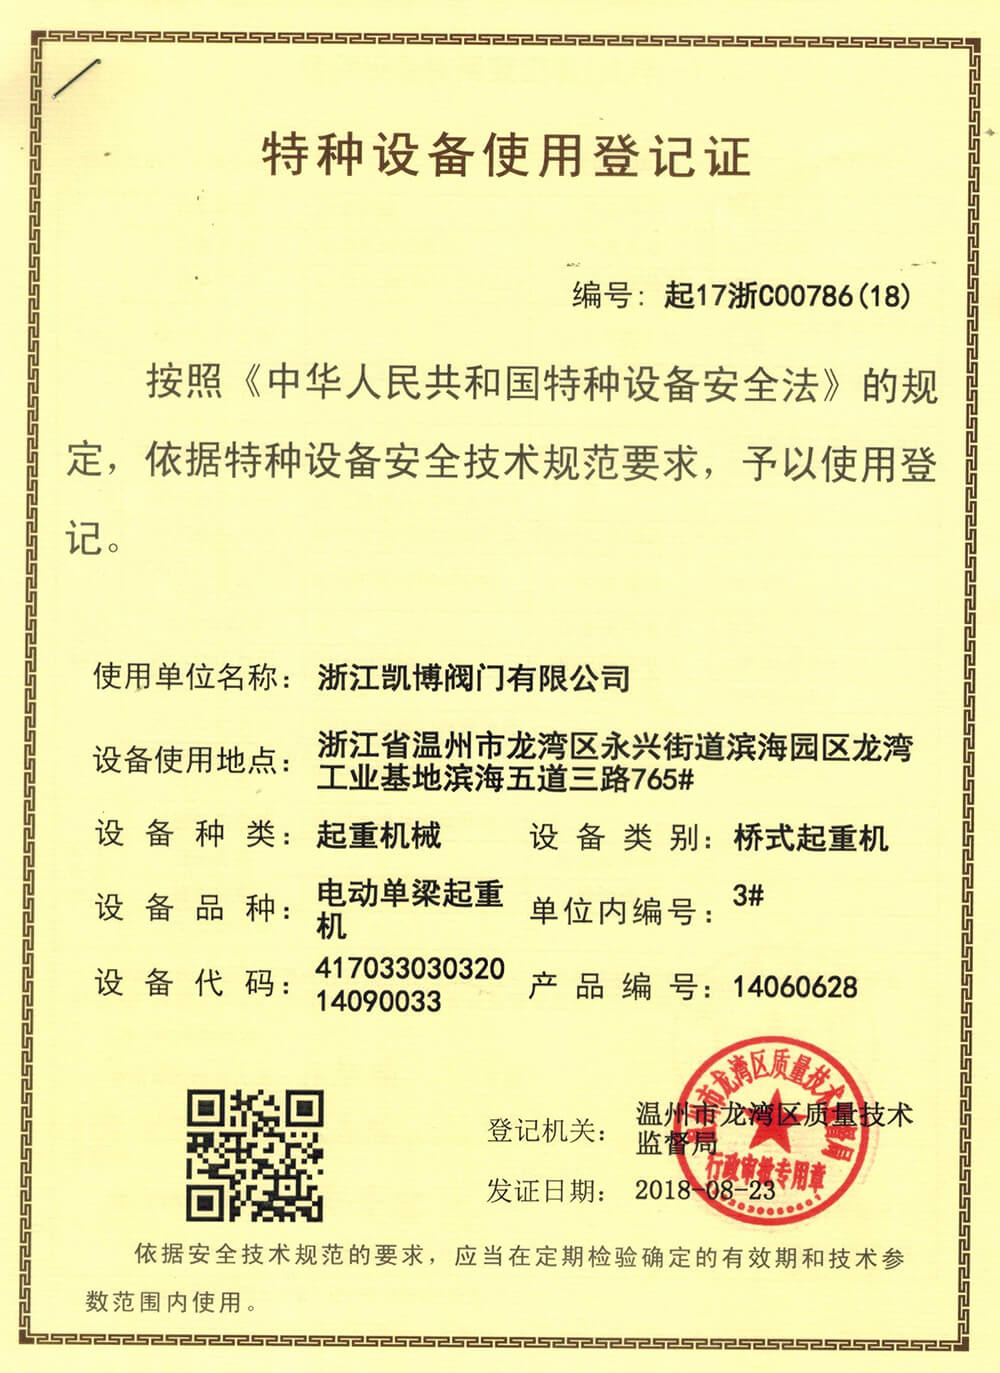 Special equipment certificate (4)